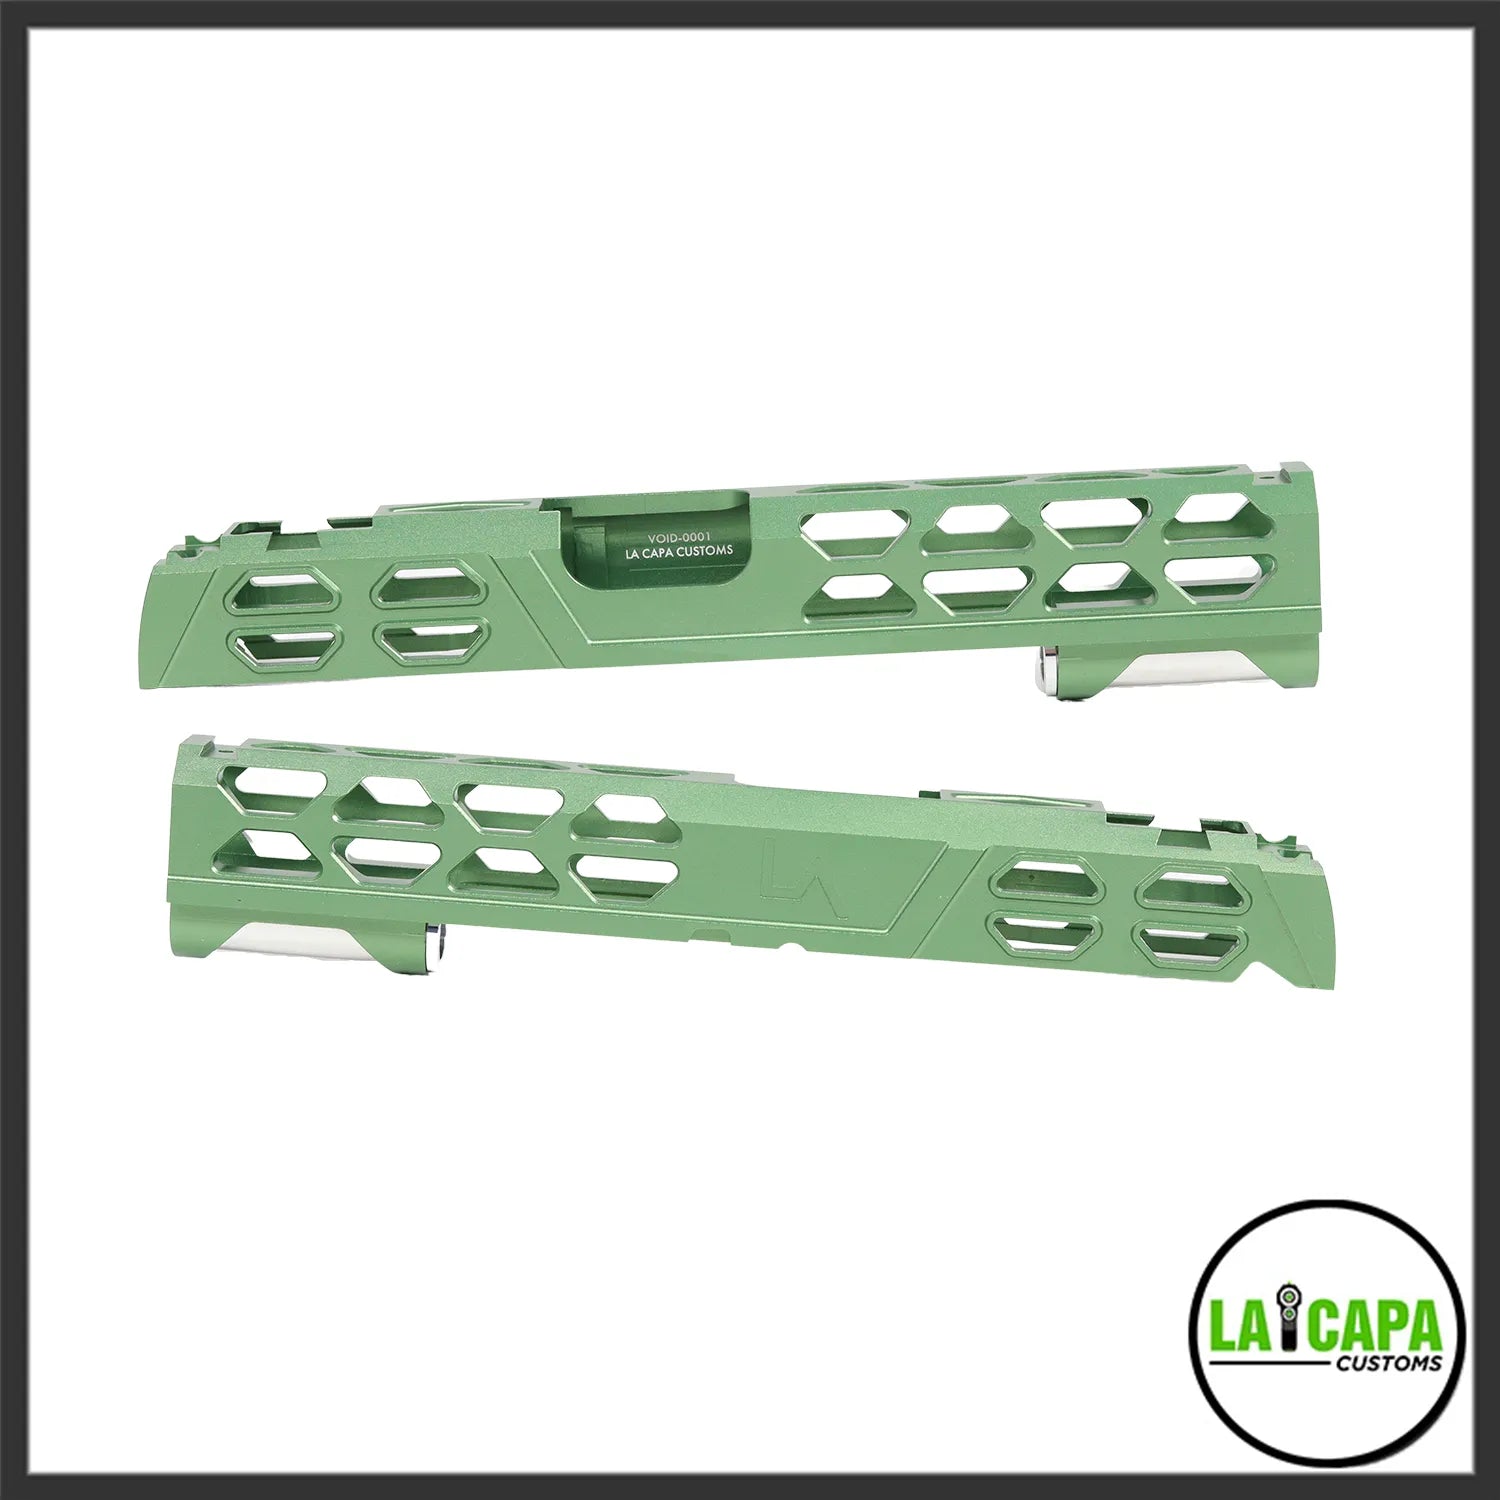 LA Capa Customs 5.1 “VOID” Aluminum Slide

- Green